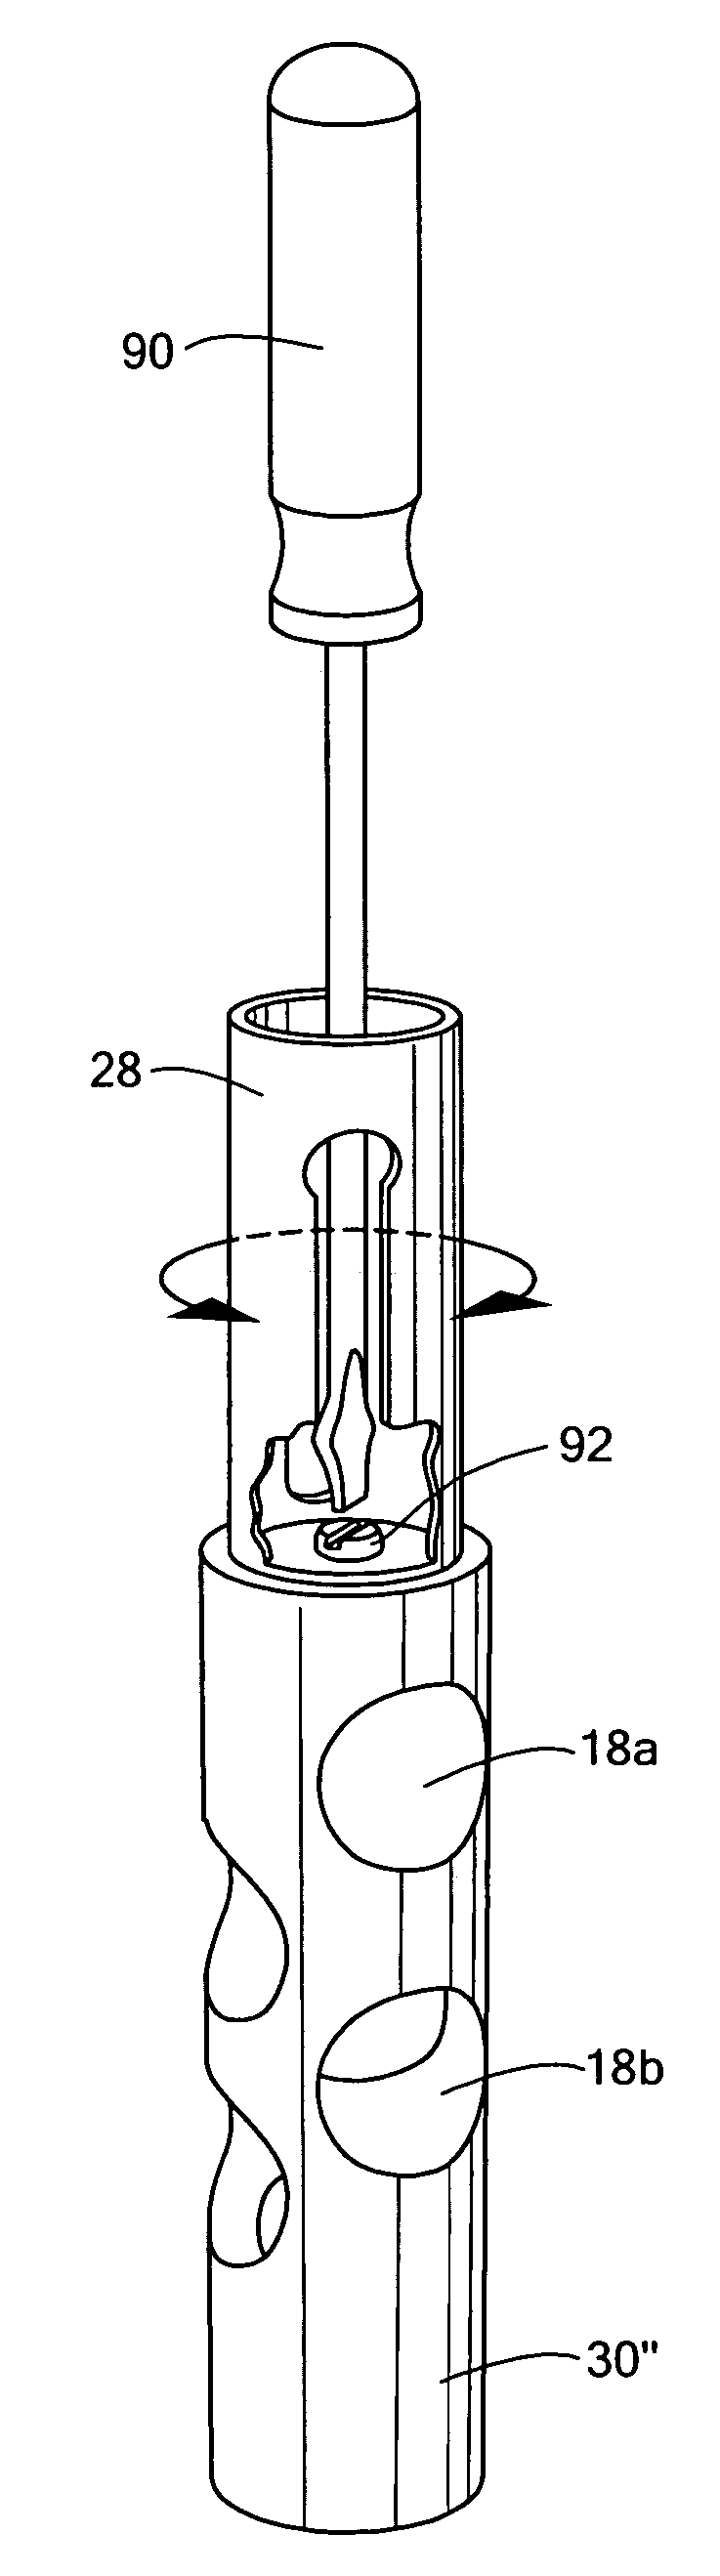 Musical instrument piston valve